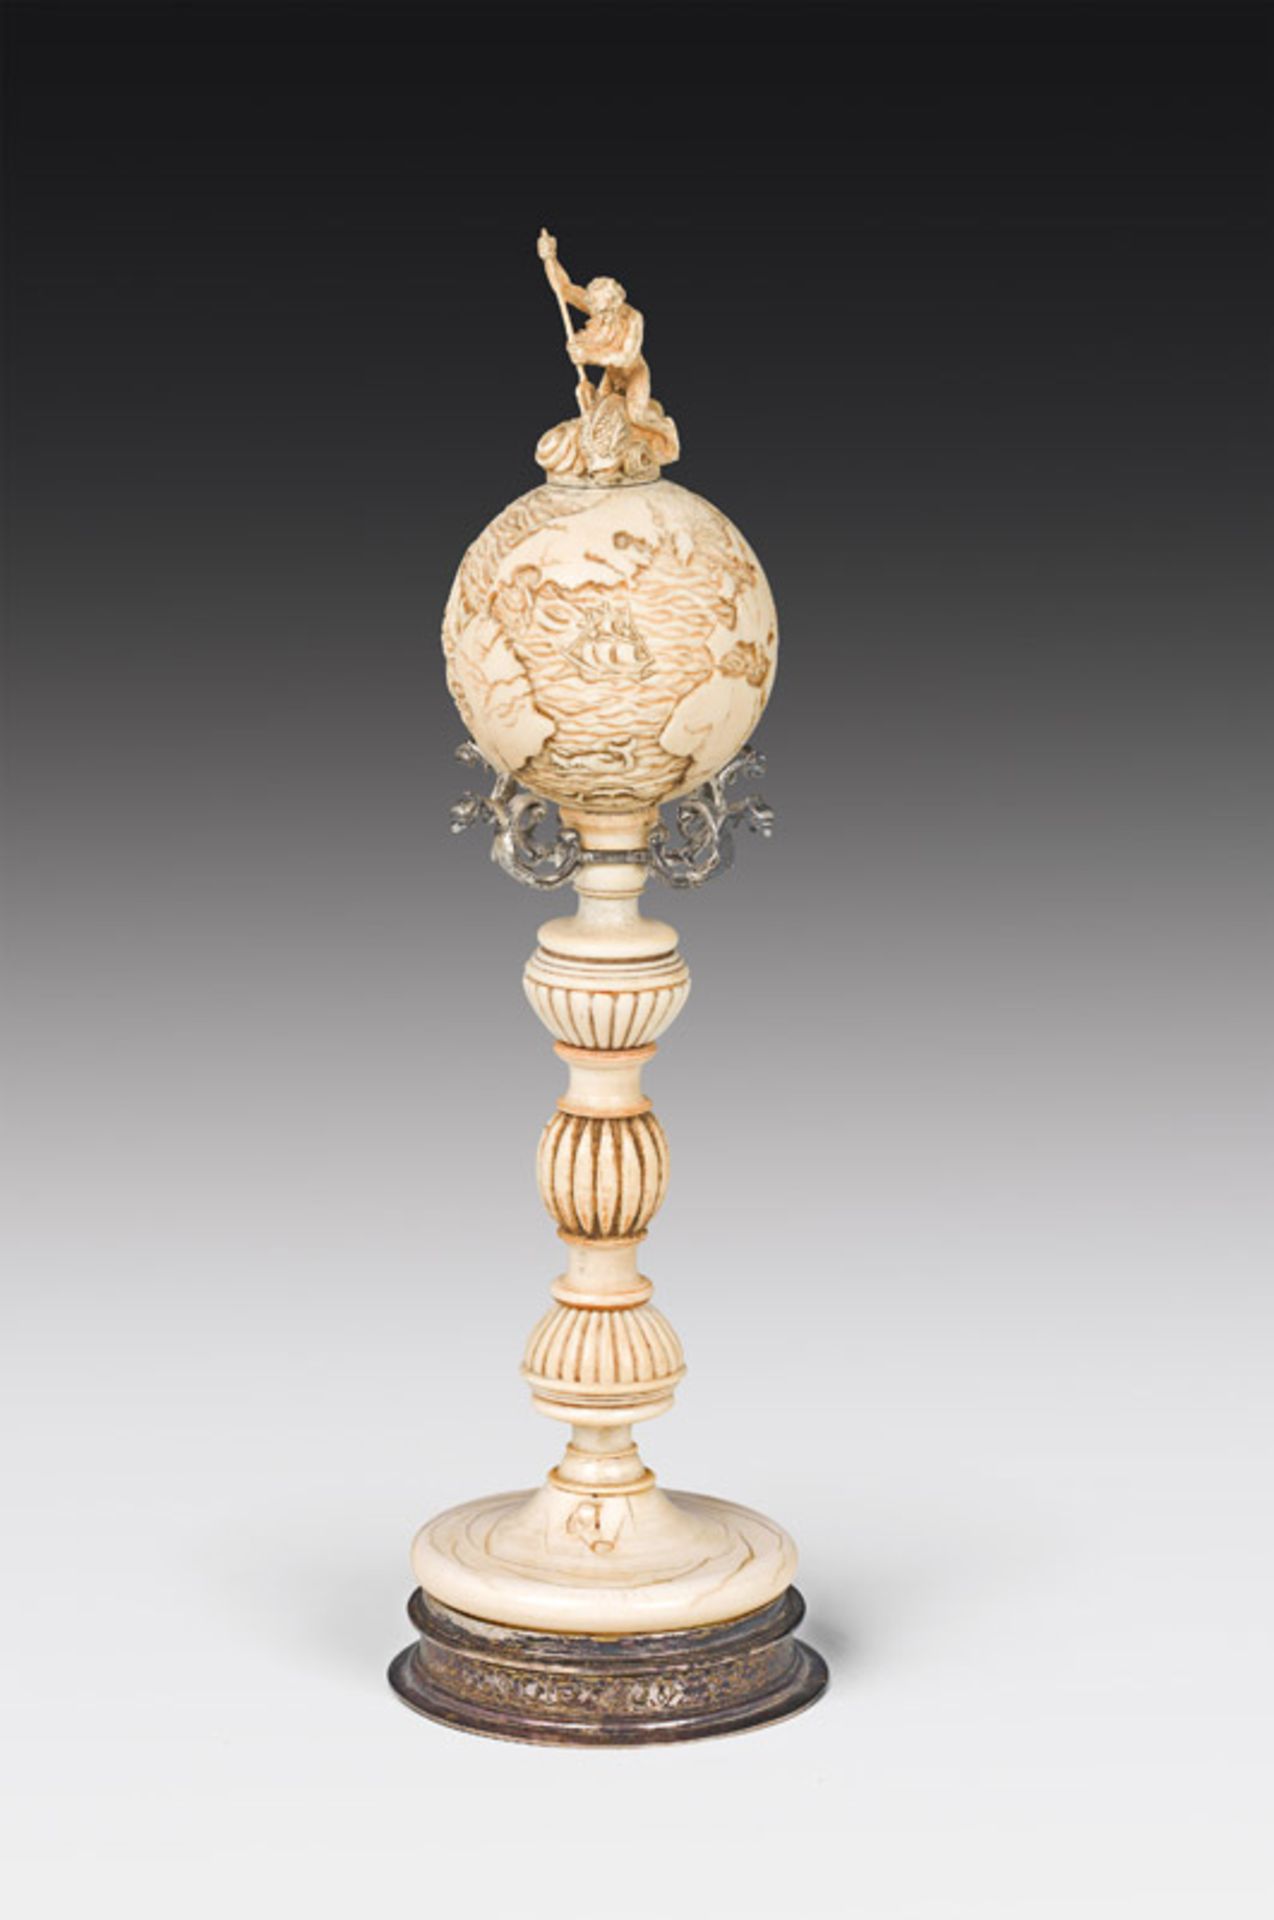 Ivory globe, late 18th/19th century